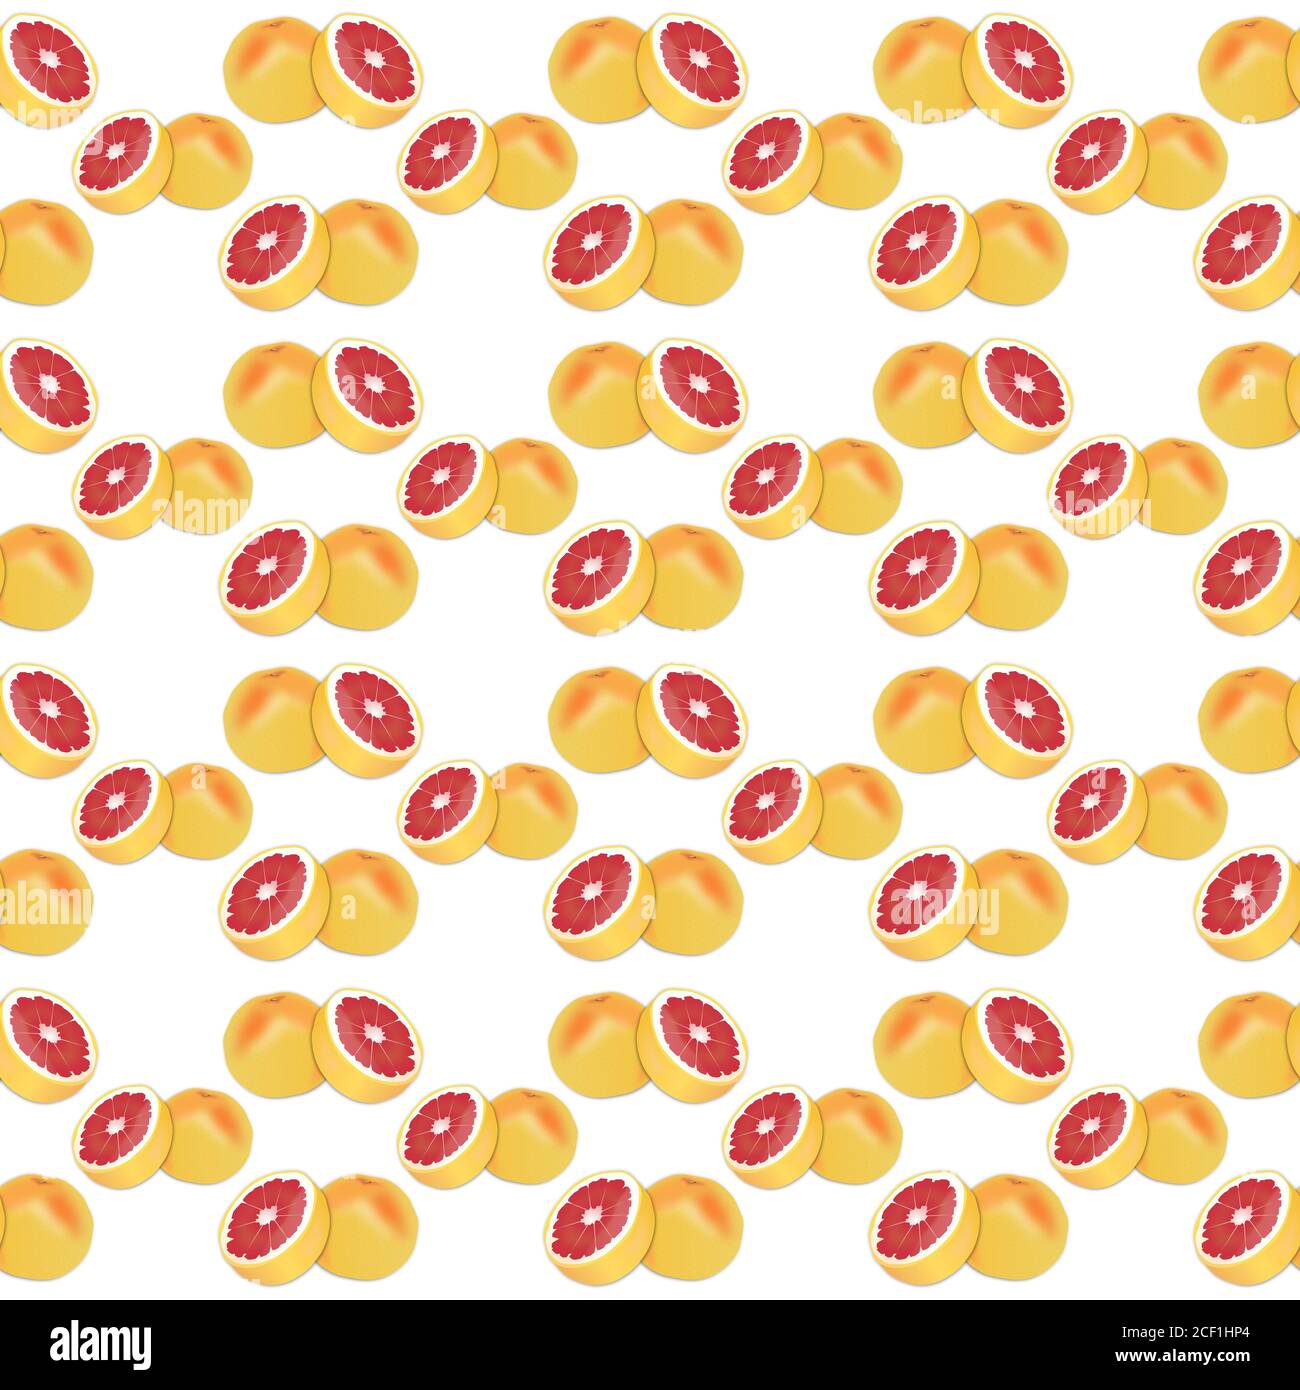 KTSP03 Grapefruit on a White Background Seamless Pattern Image,Grapefruit Seamless Image, Stock Photo